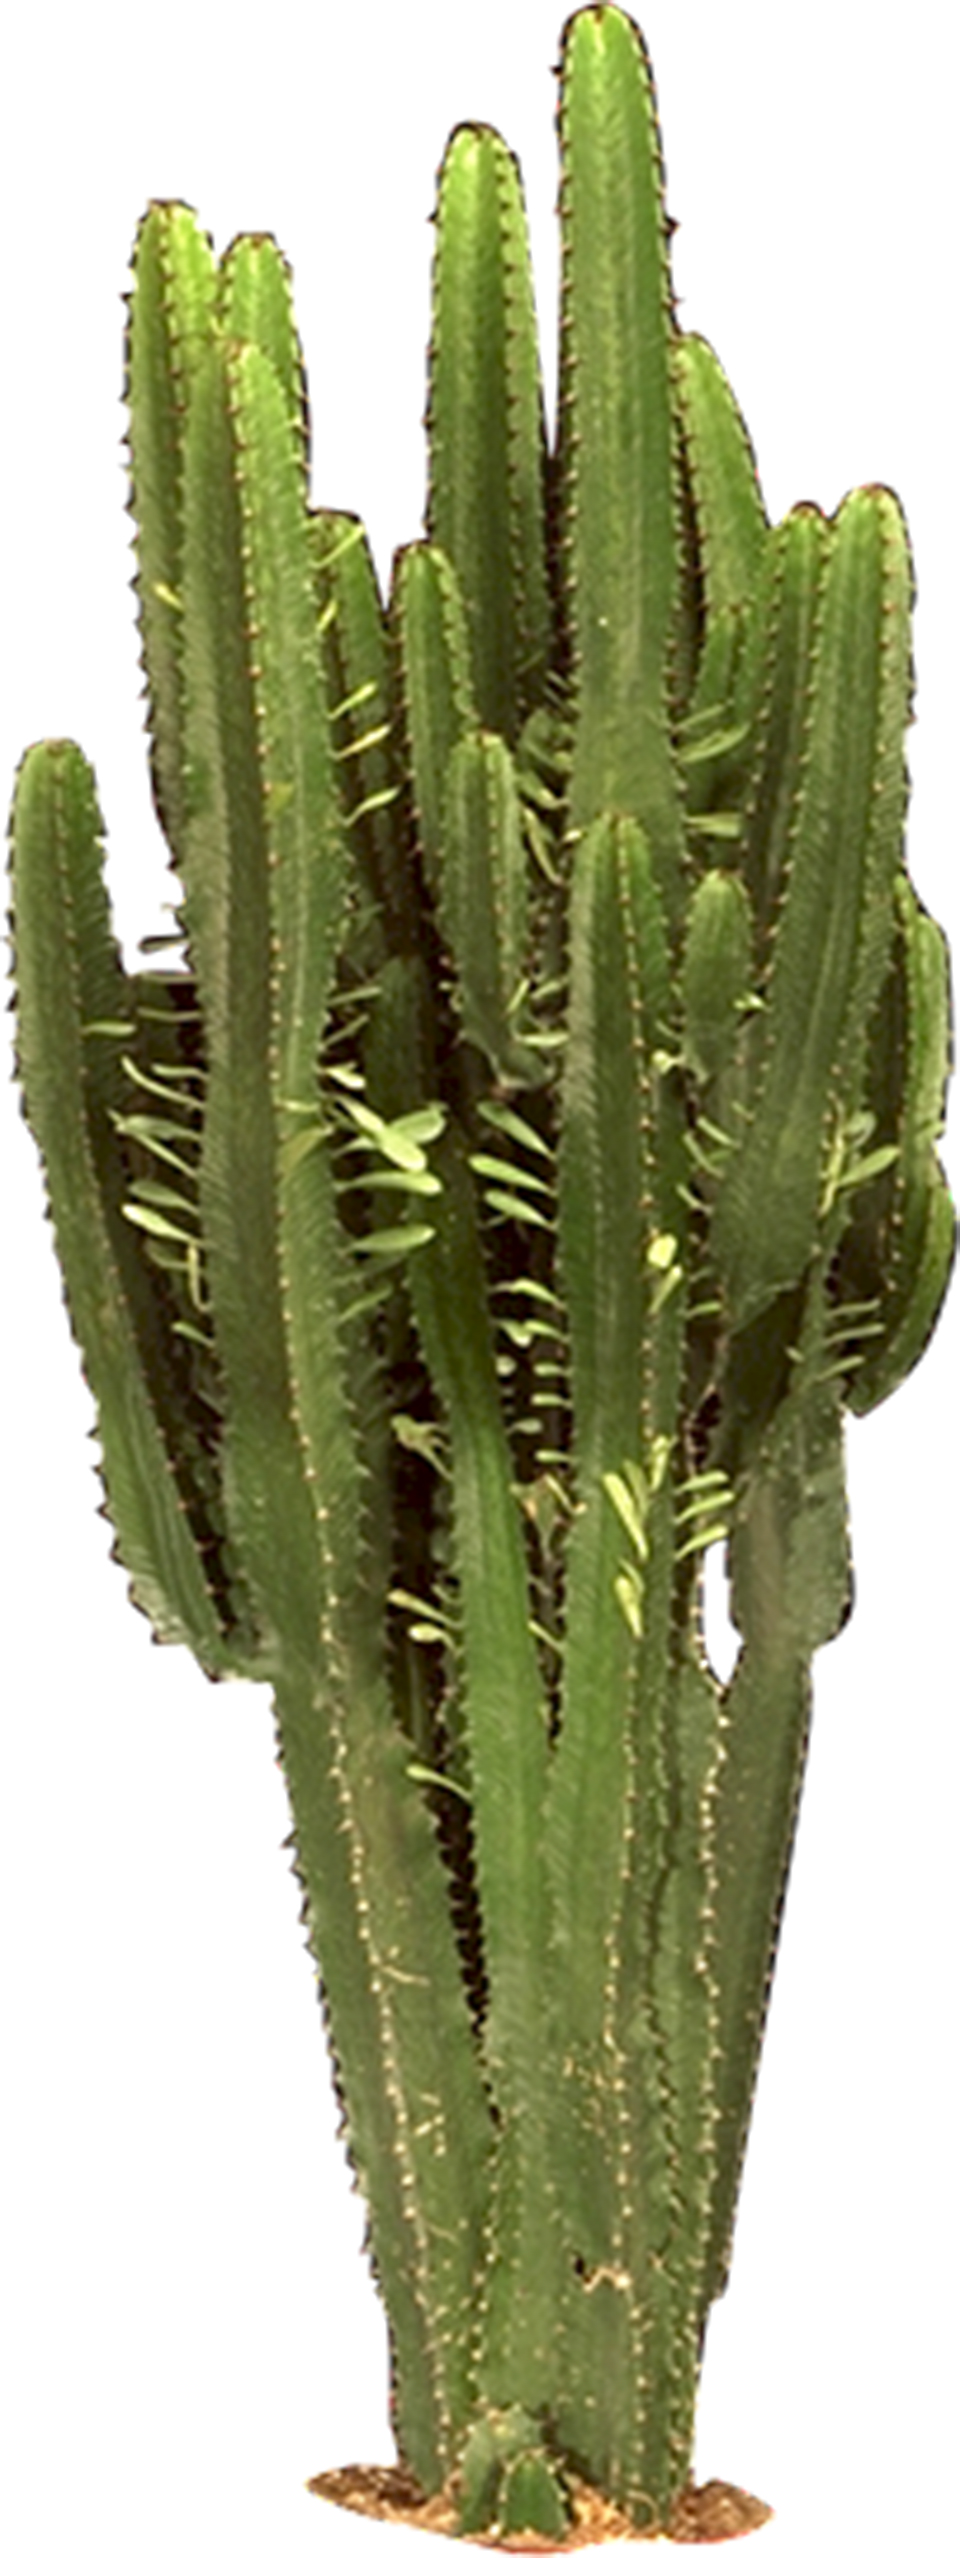 Cactus PNG - 12090